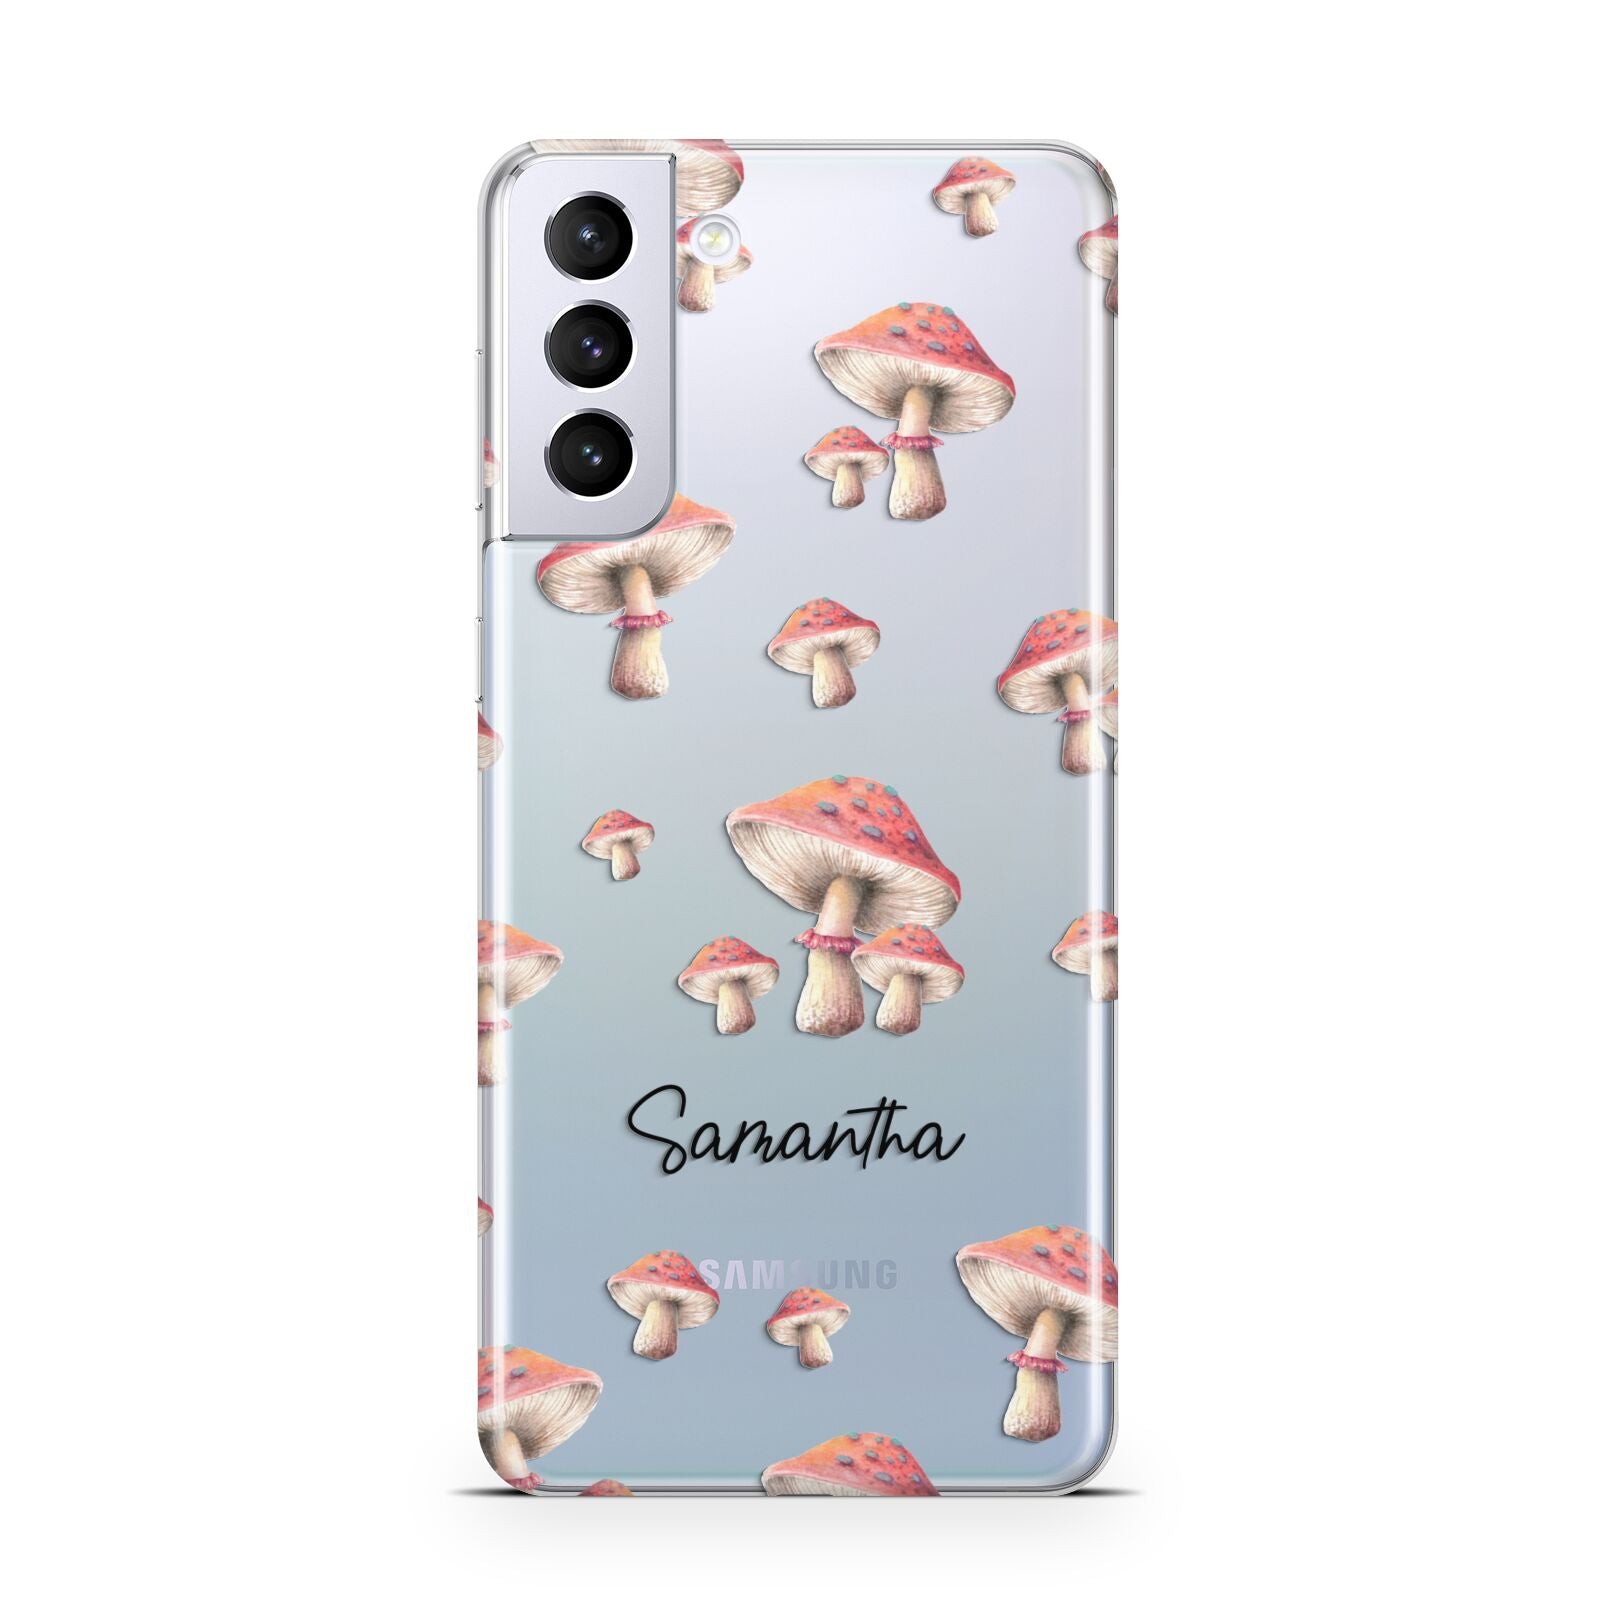 Mushroom Illustrations with Name Samsung S21 Plus Phone Case